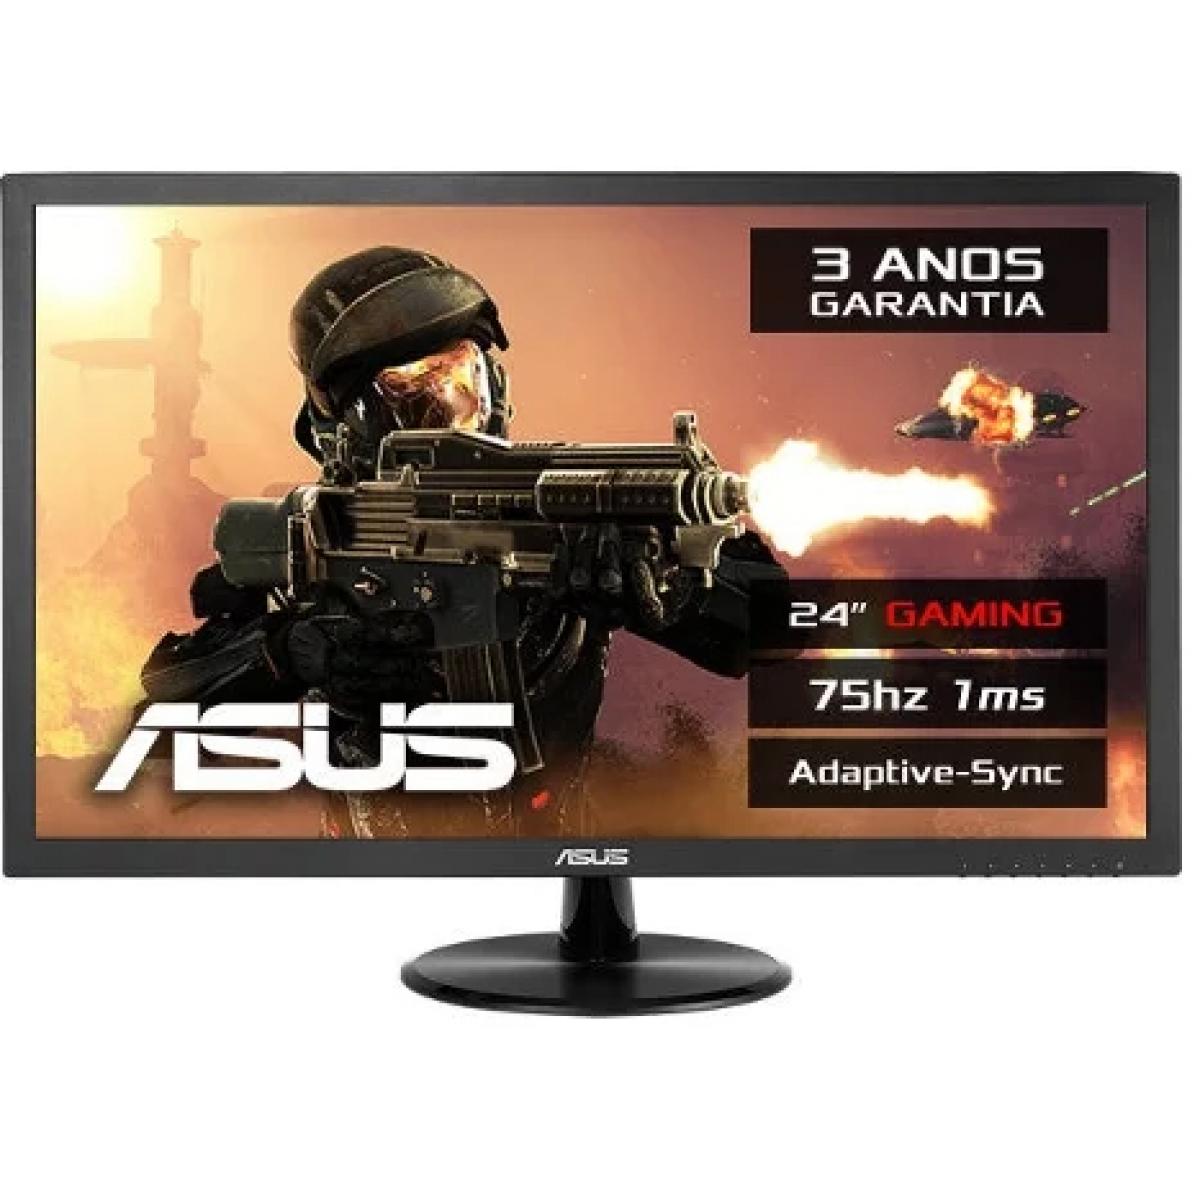 ASUS VP248H 24'' 75HZ 1MS 1080P Gaming Monitor